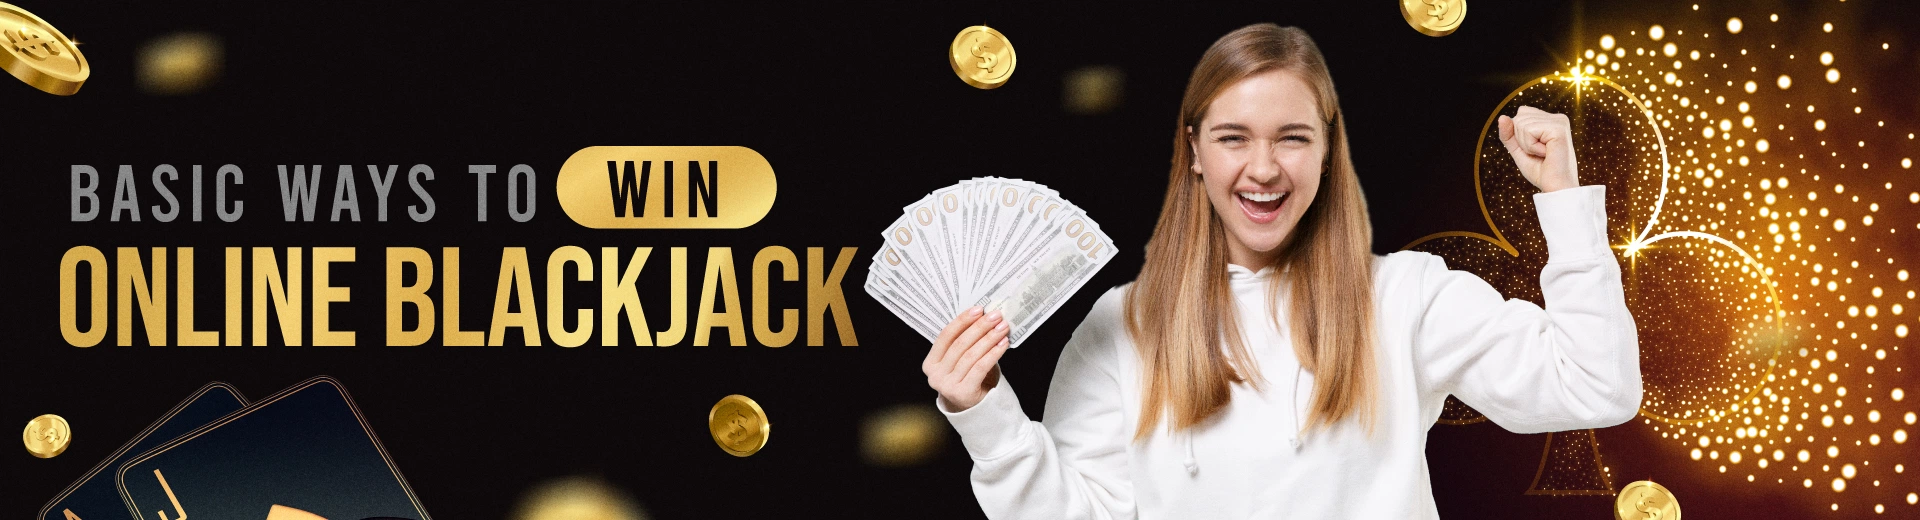 6 Basic Ways To Win Online Blackjack in OKBET Casino Live - OKBET online blackjack